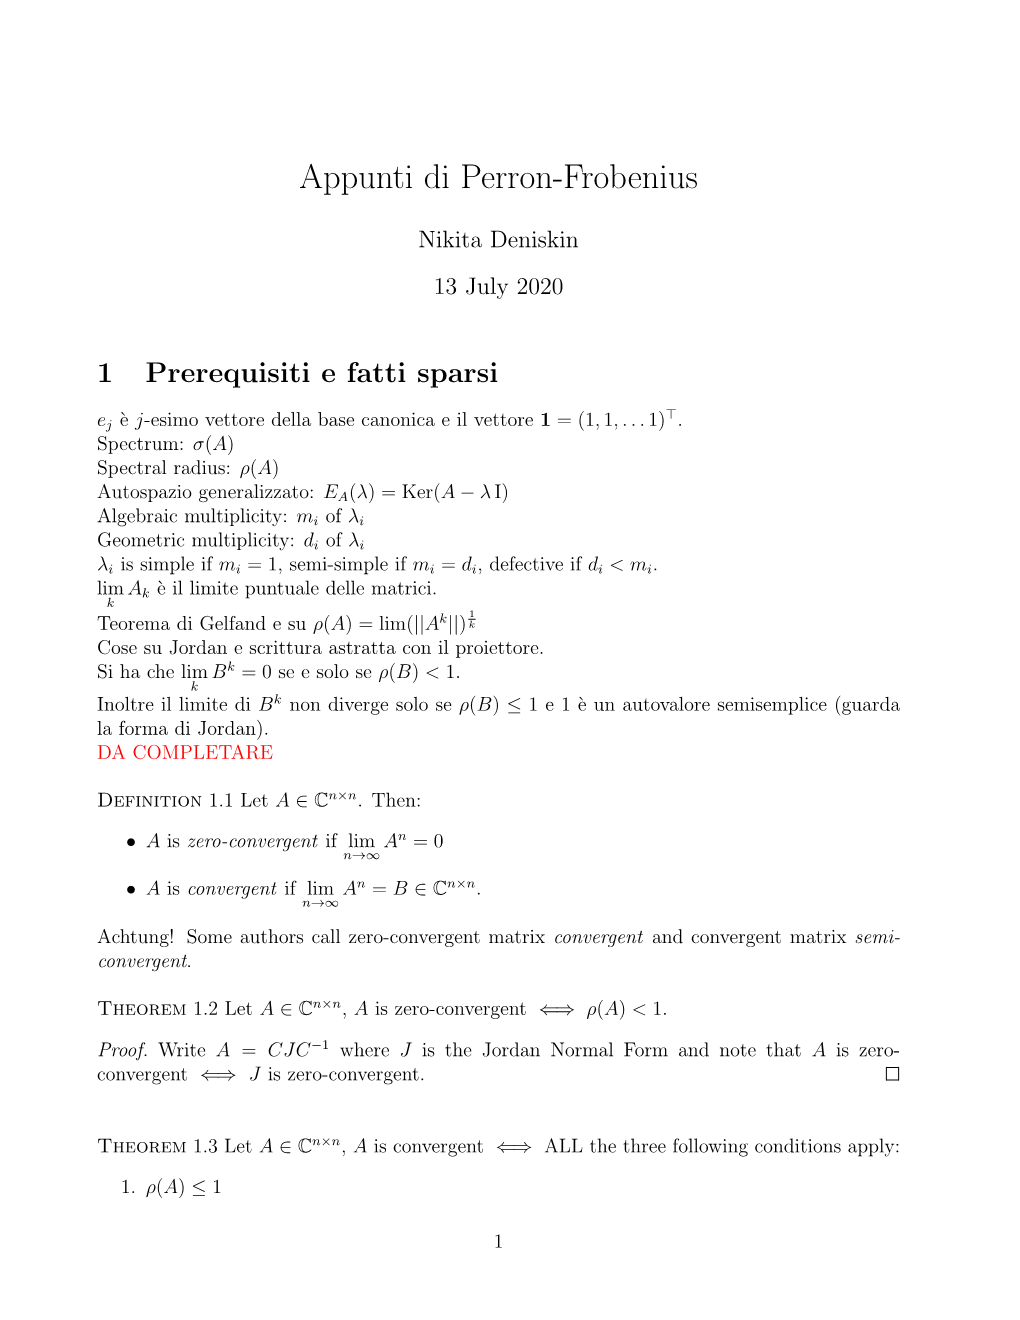 Appunti Di Perron-Frobenius